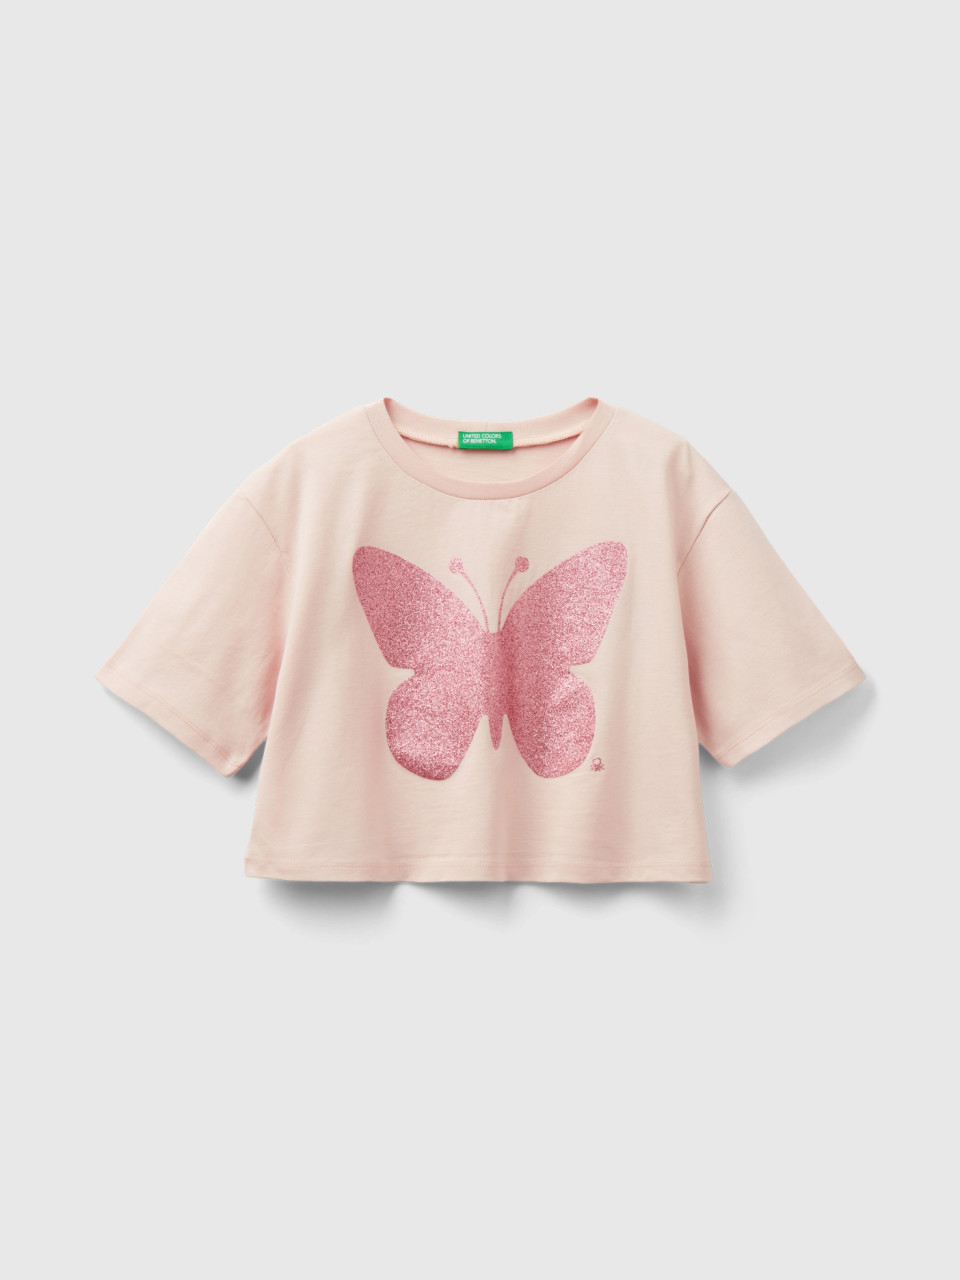 Benetton, T-shirt With Glittery Print, Peach, Kids